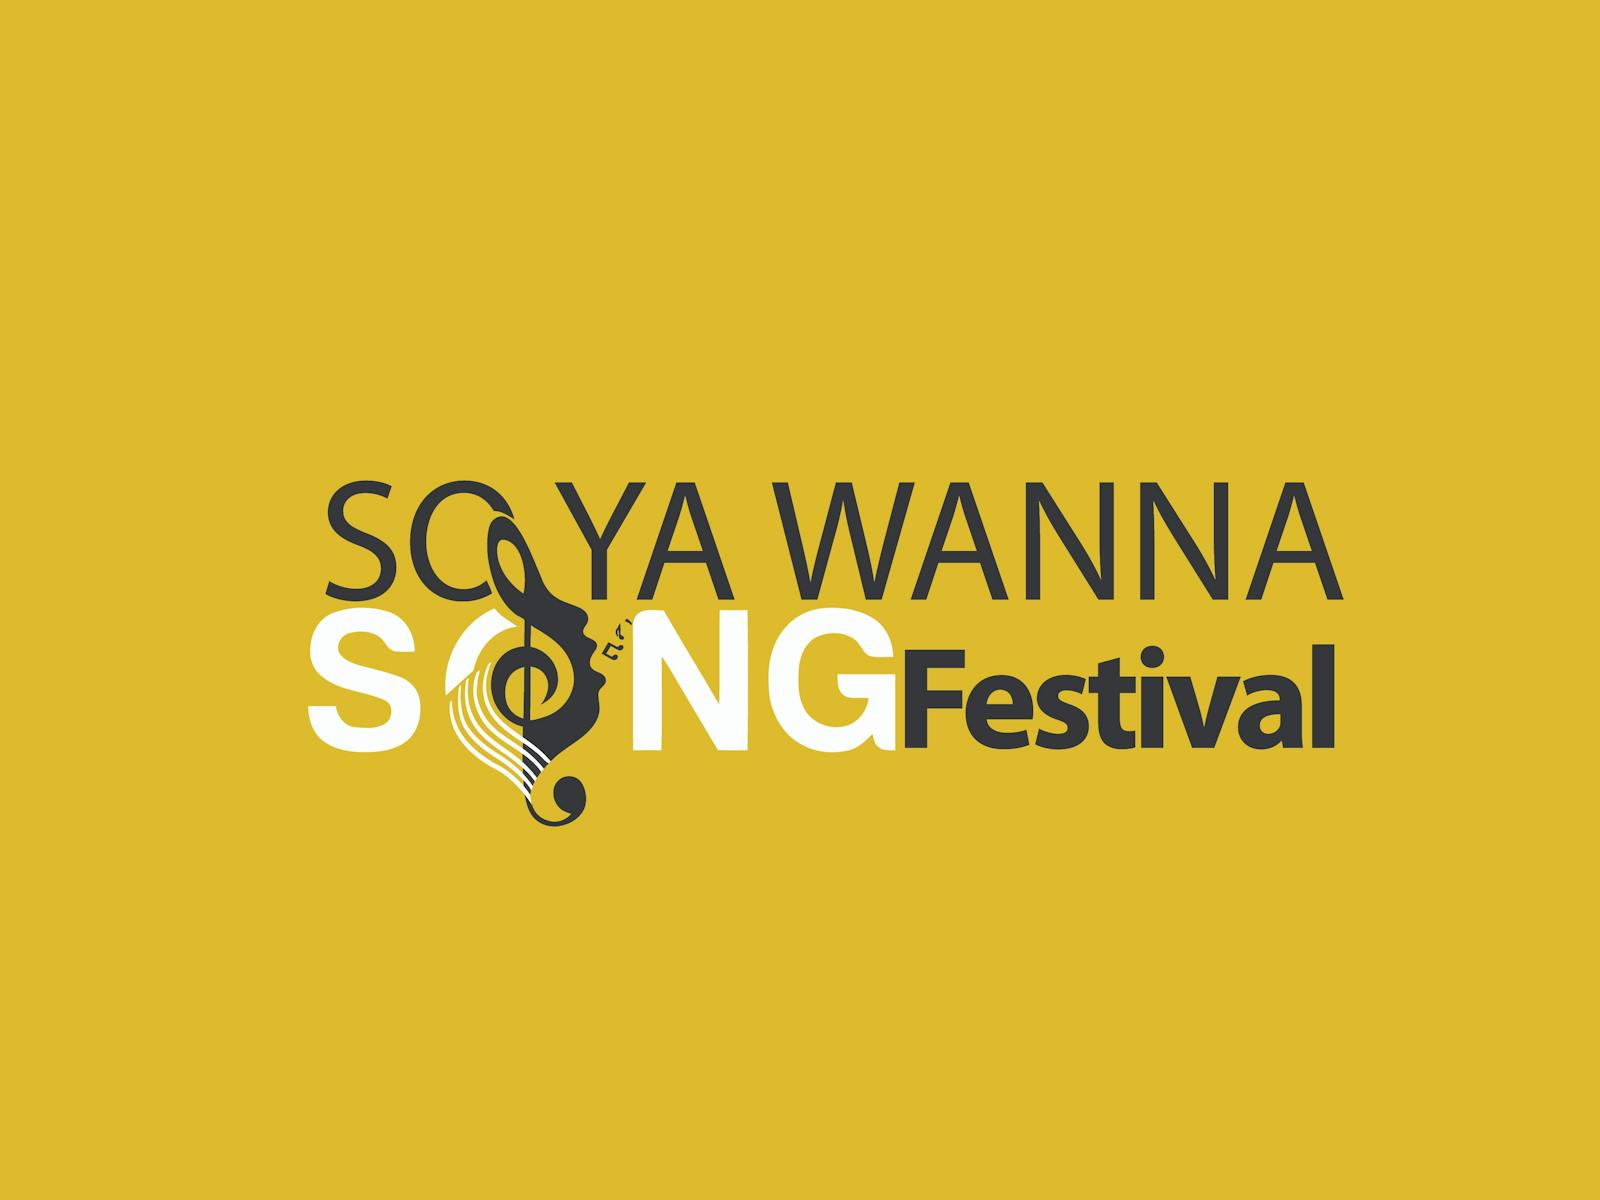 Image for Soyawanna Song Festival